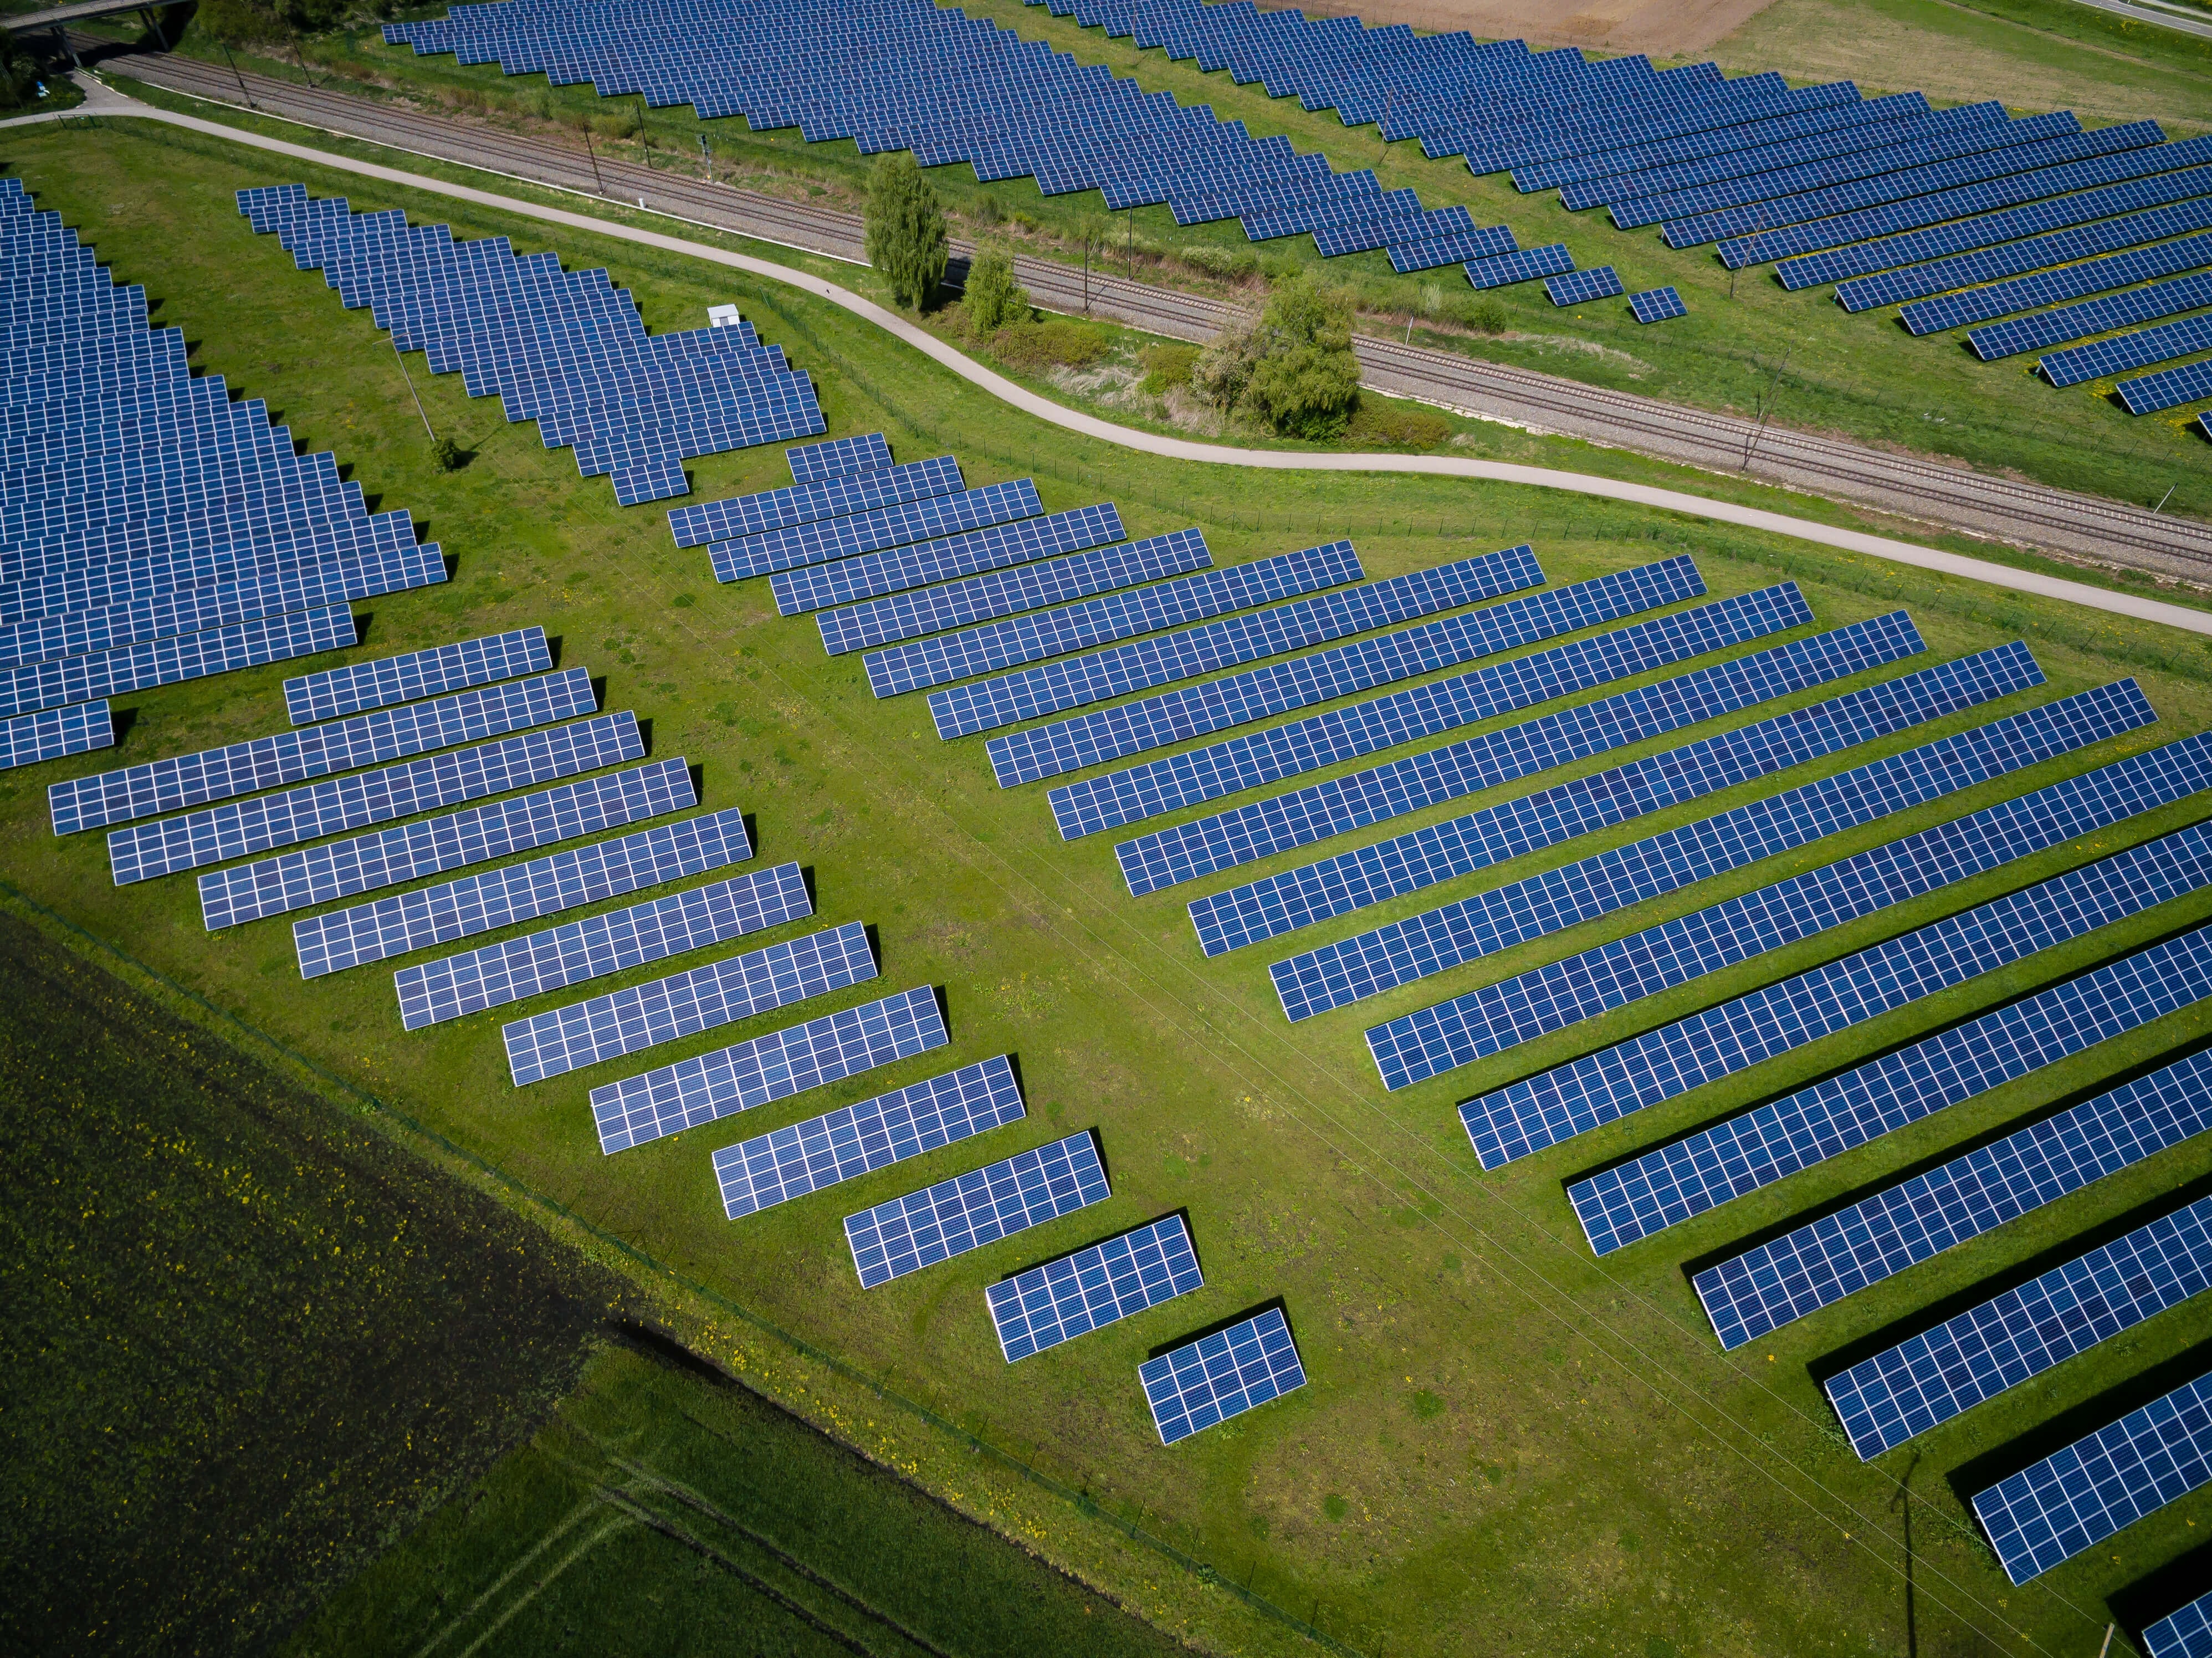 Rows of black solar panels in a green field